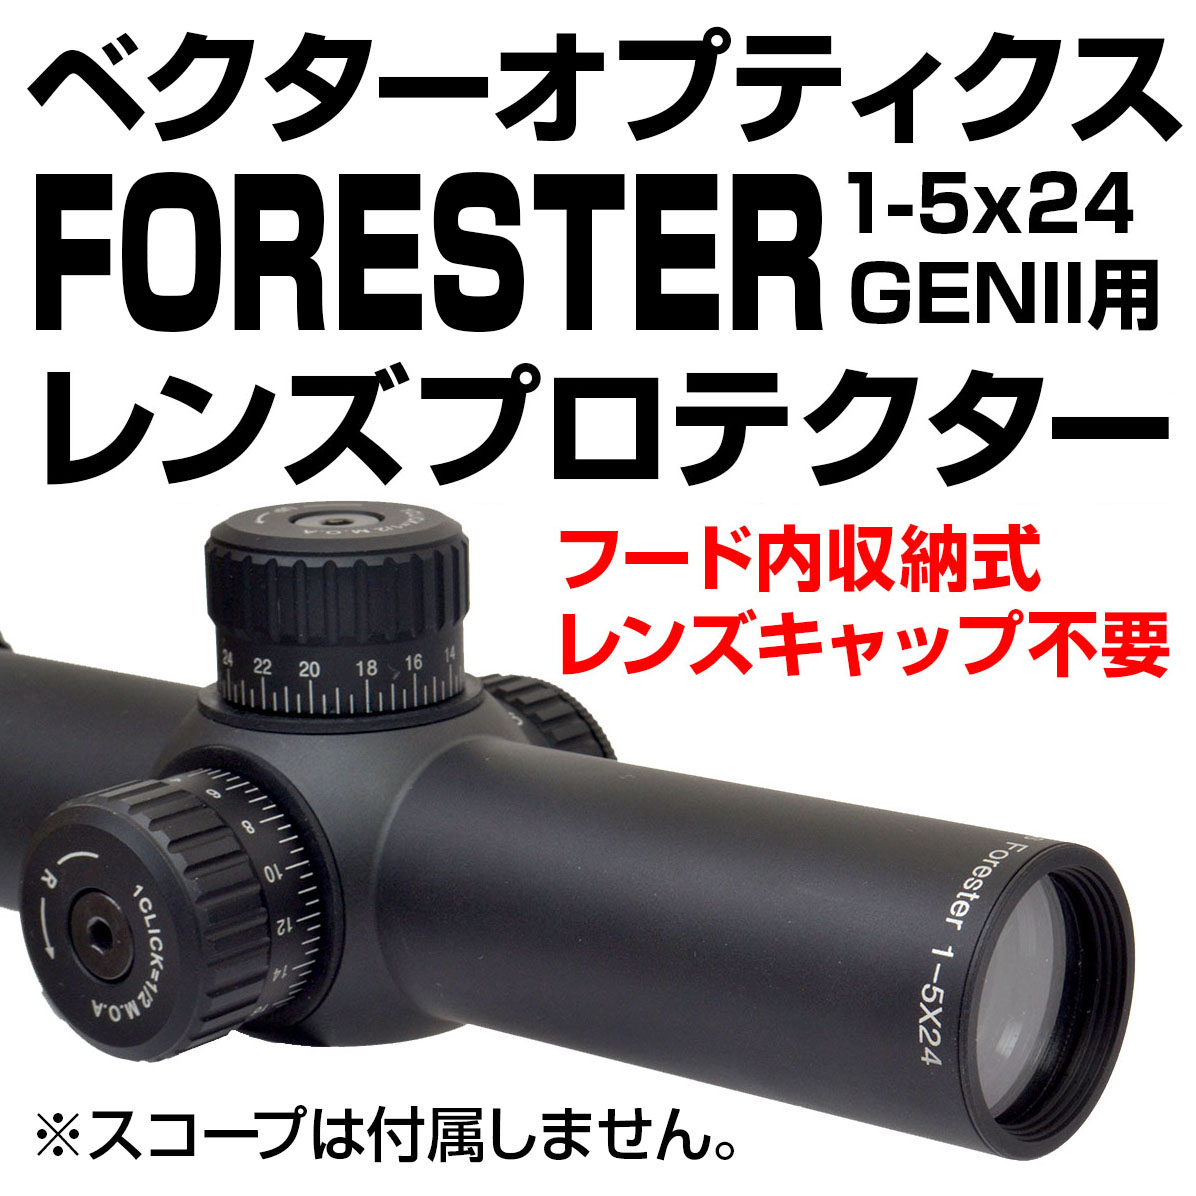 AIRSOFT97 沖縄本店 通販部 / Vector Optics Forester 1-5x24 Gen2